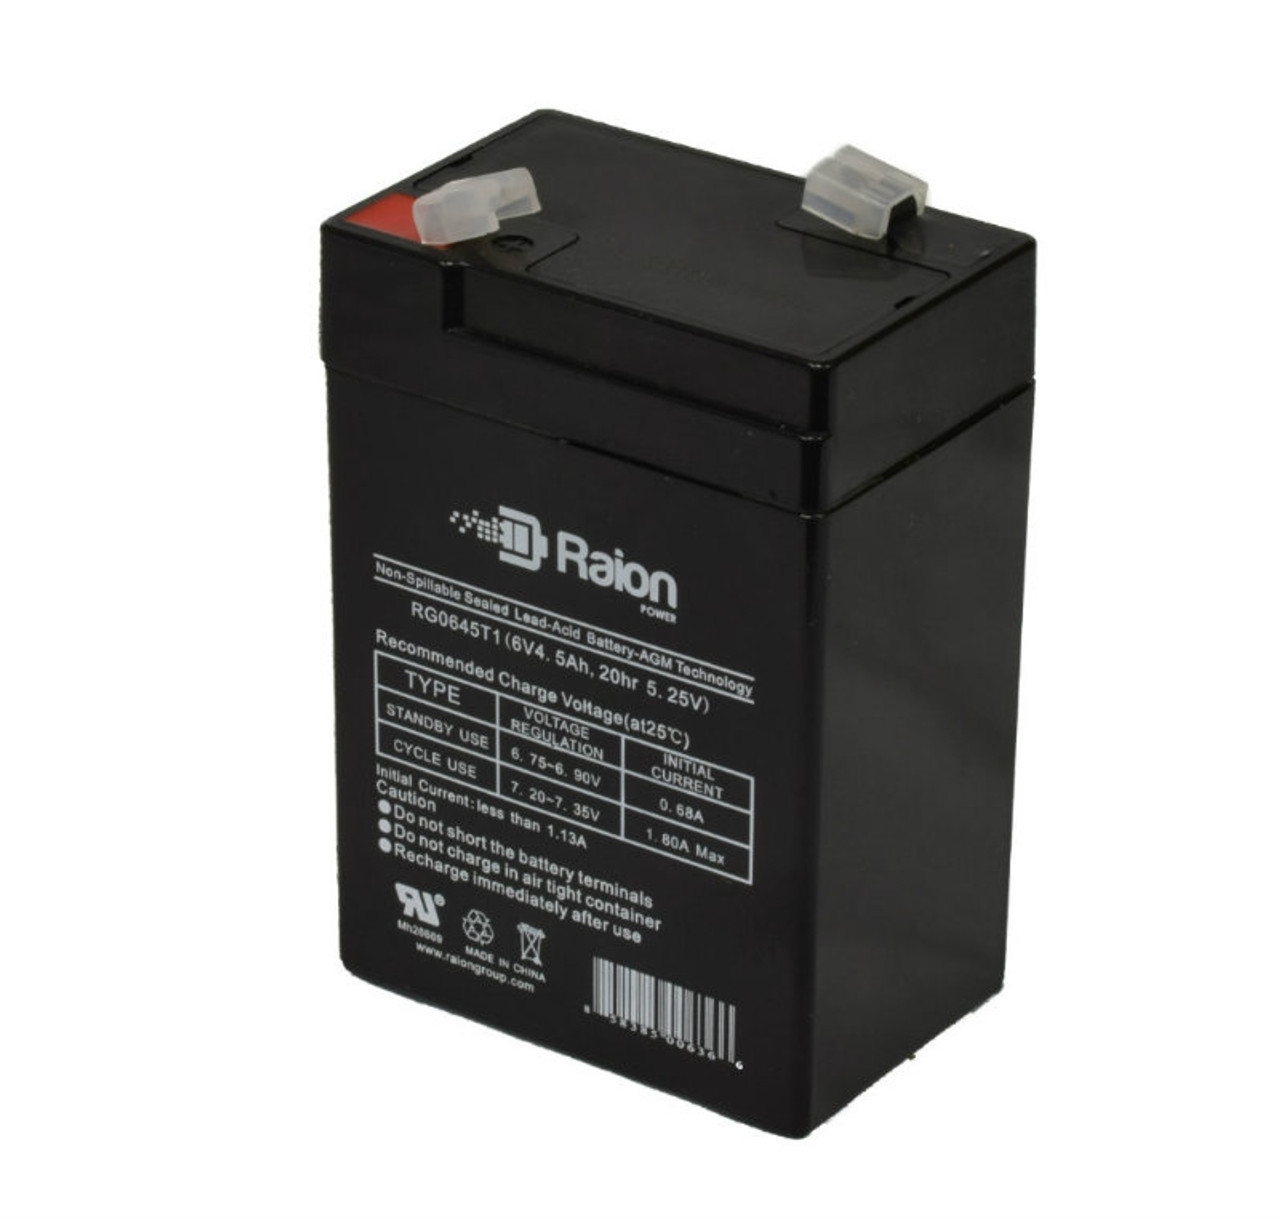 Raion Power RG0645T1 6V 4.5Ah Replacement Spotlight Battery Cartridge for Kawasaki 10 Million Candlepower